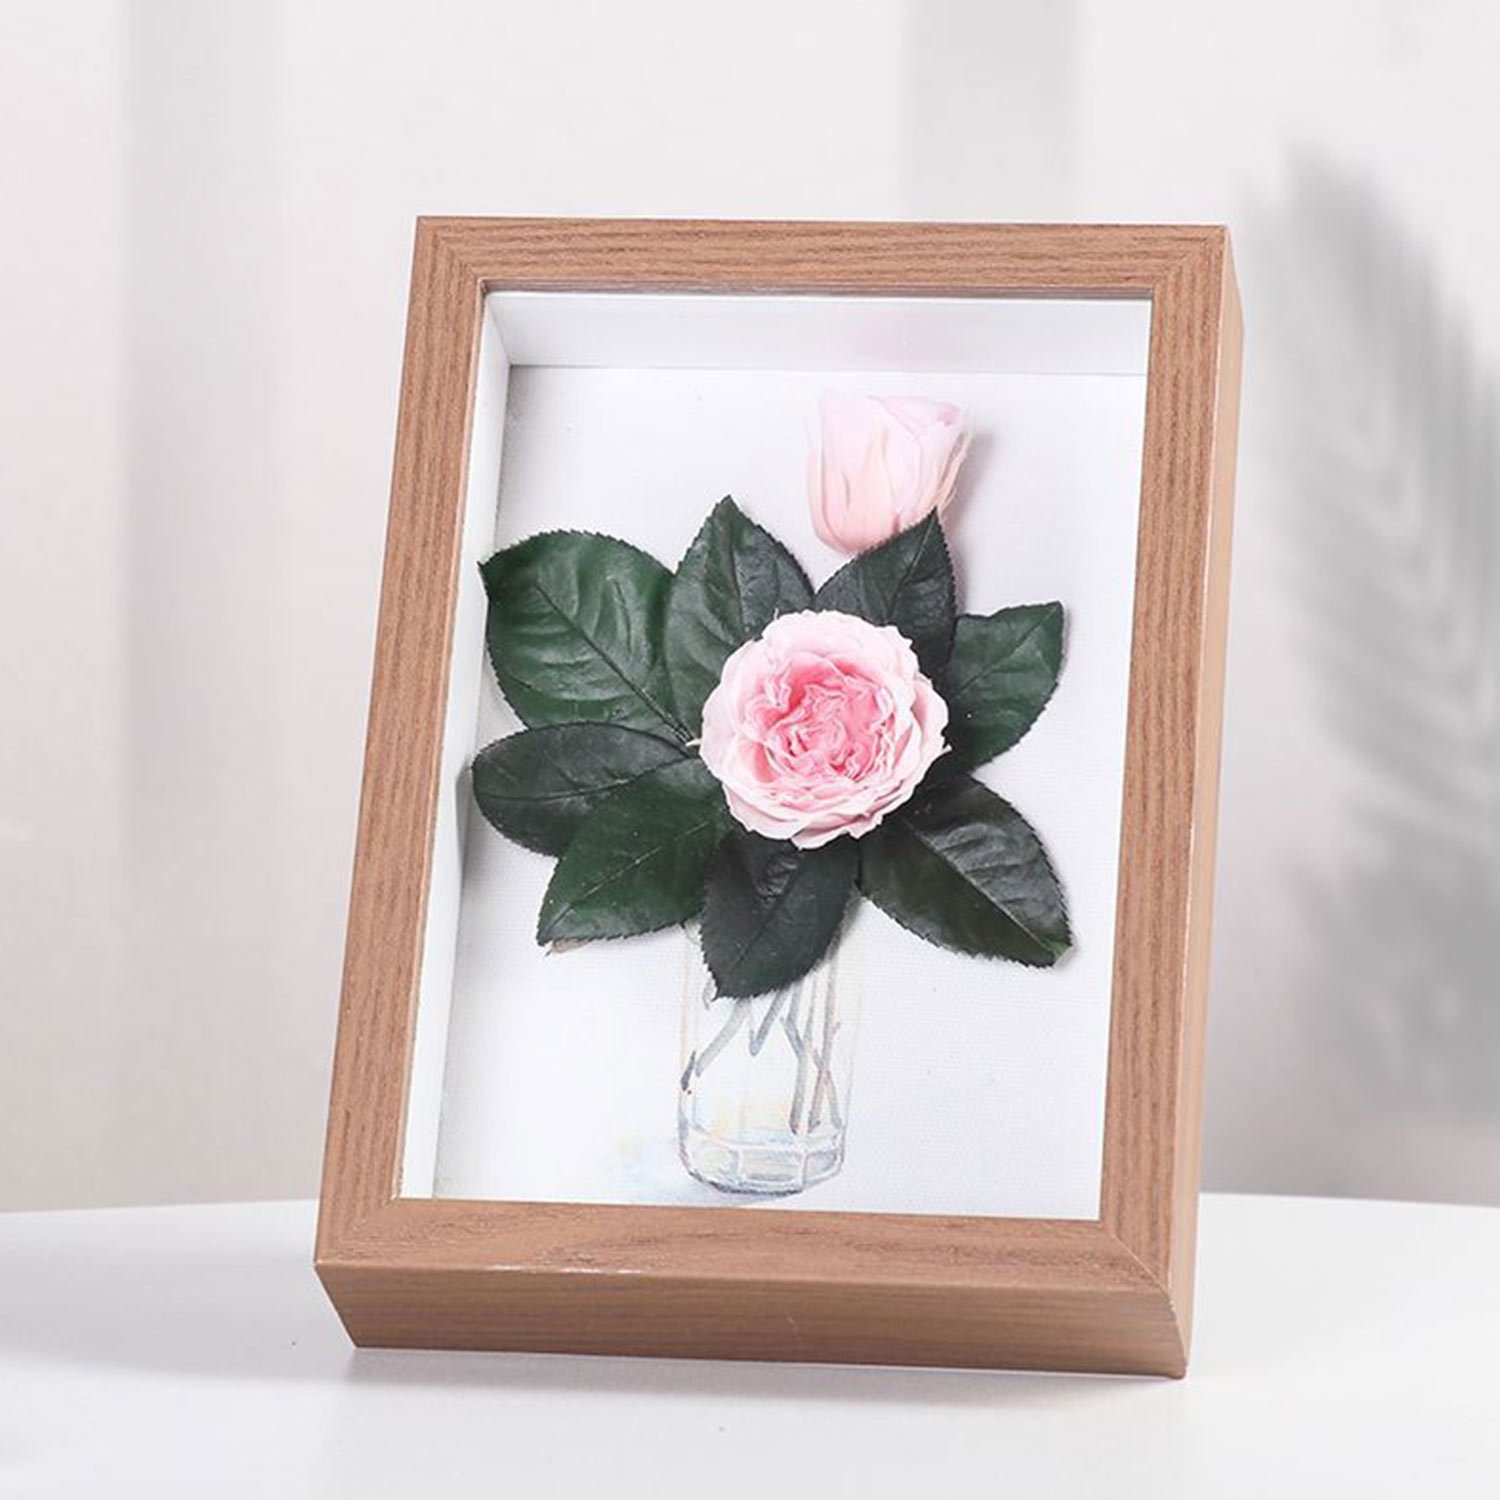 Kunstblume Ewige handgemachte konservierte Rose, MAGICSHE, zum Befüllen Quadratische Form Rosa Austin